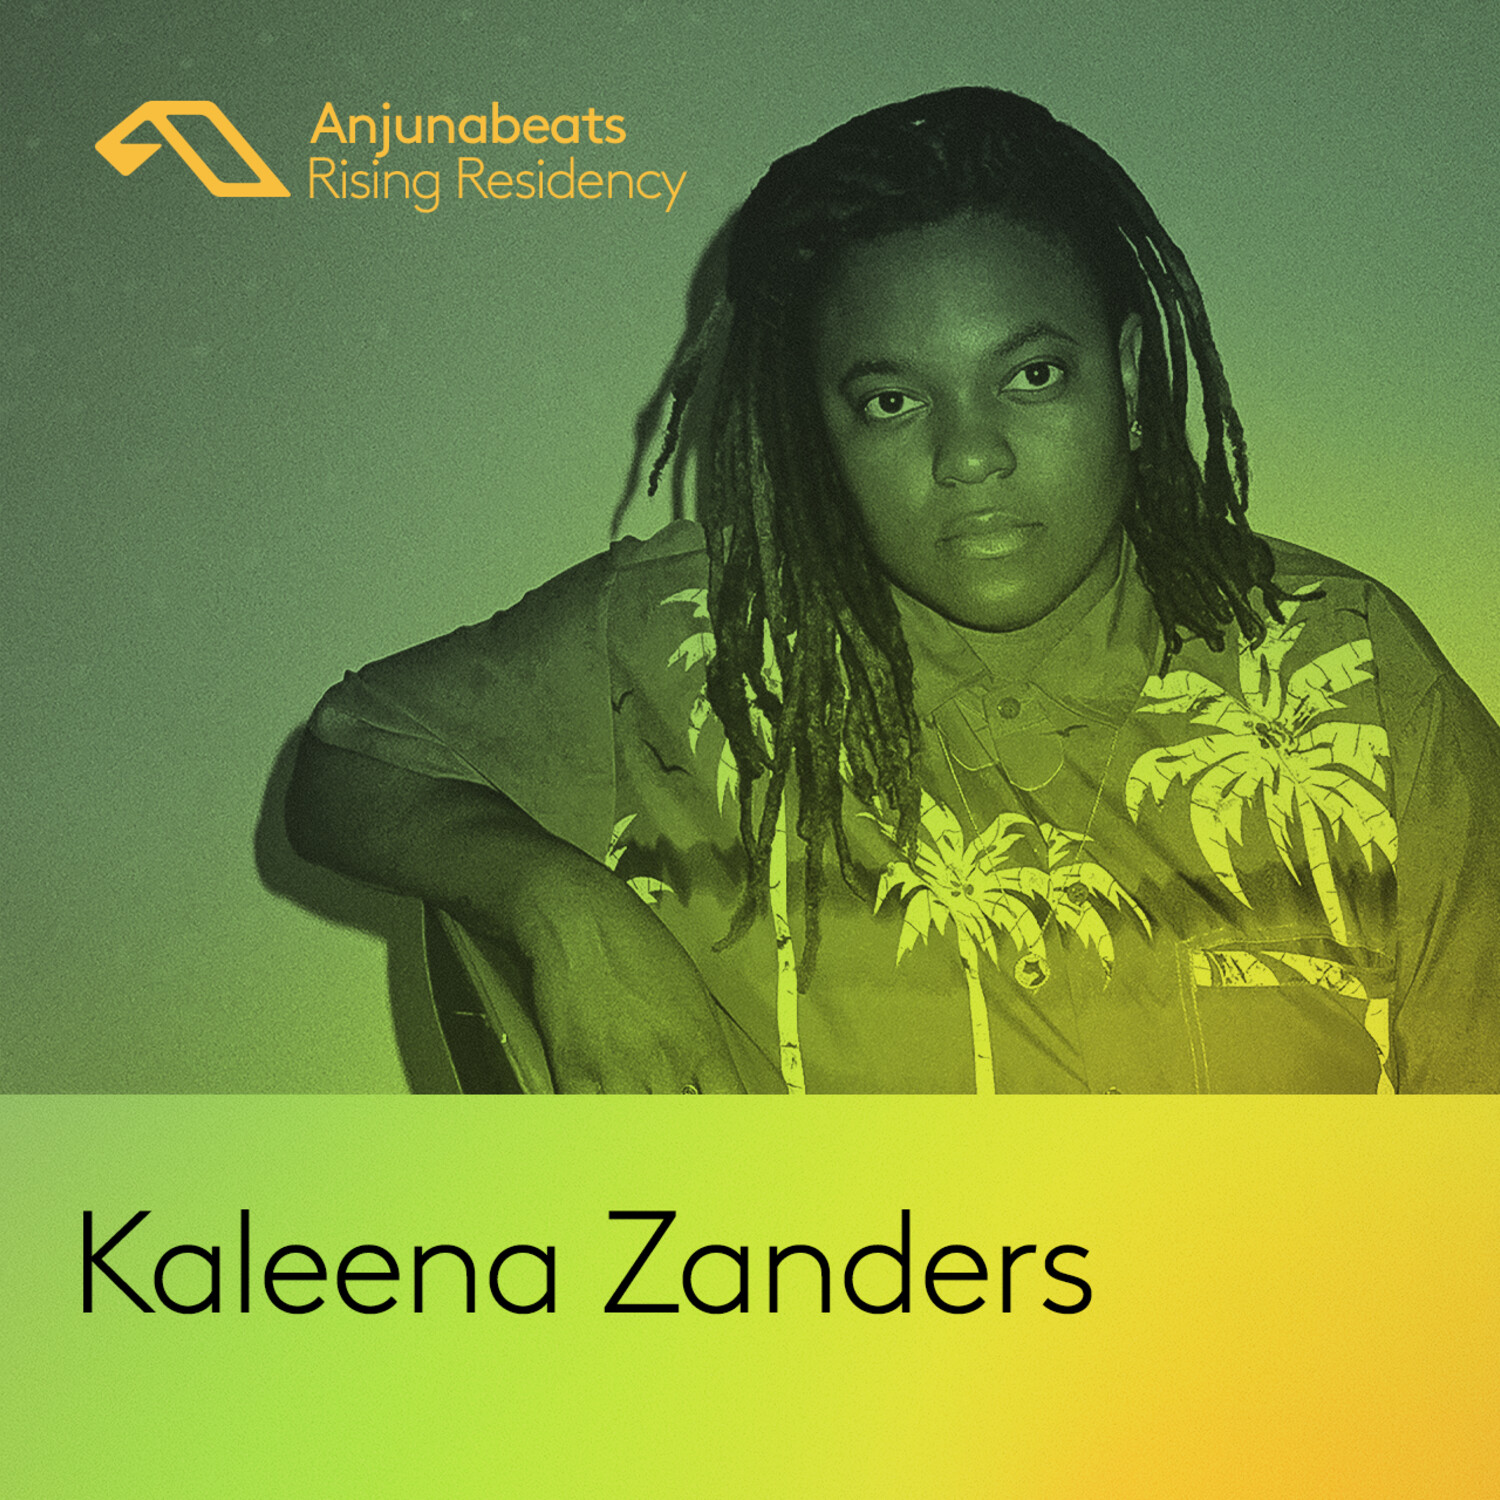 The Anjunabeats Rising Residency with Kaleena Zanders